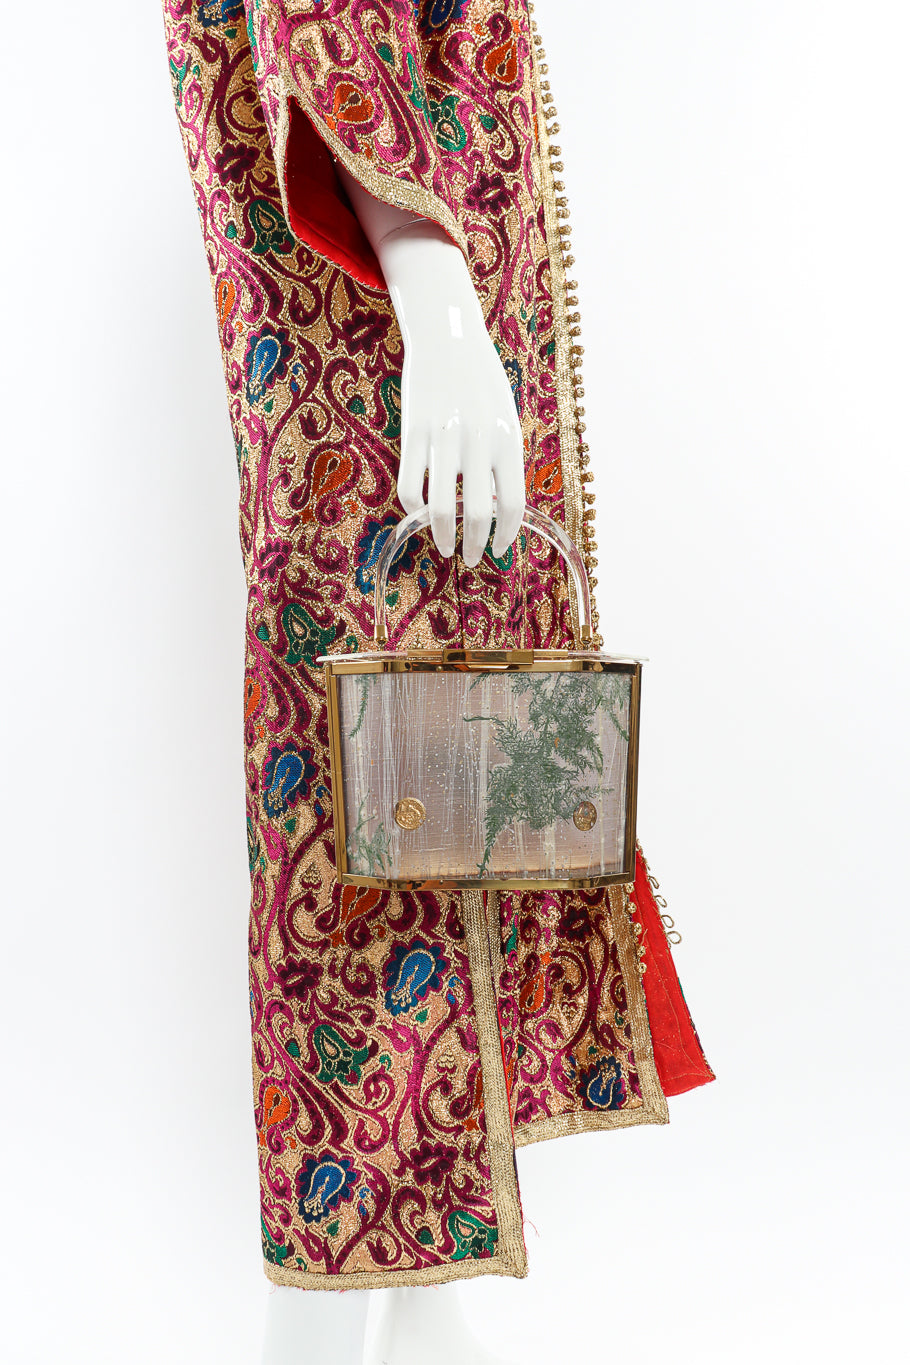 Vintage Majestic Pressed Foliage Lucite Box Bag on mannequin @Recessla